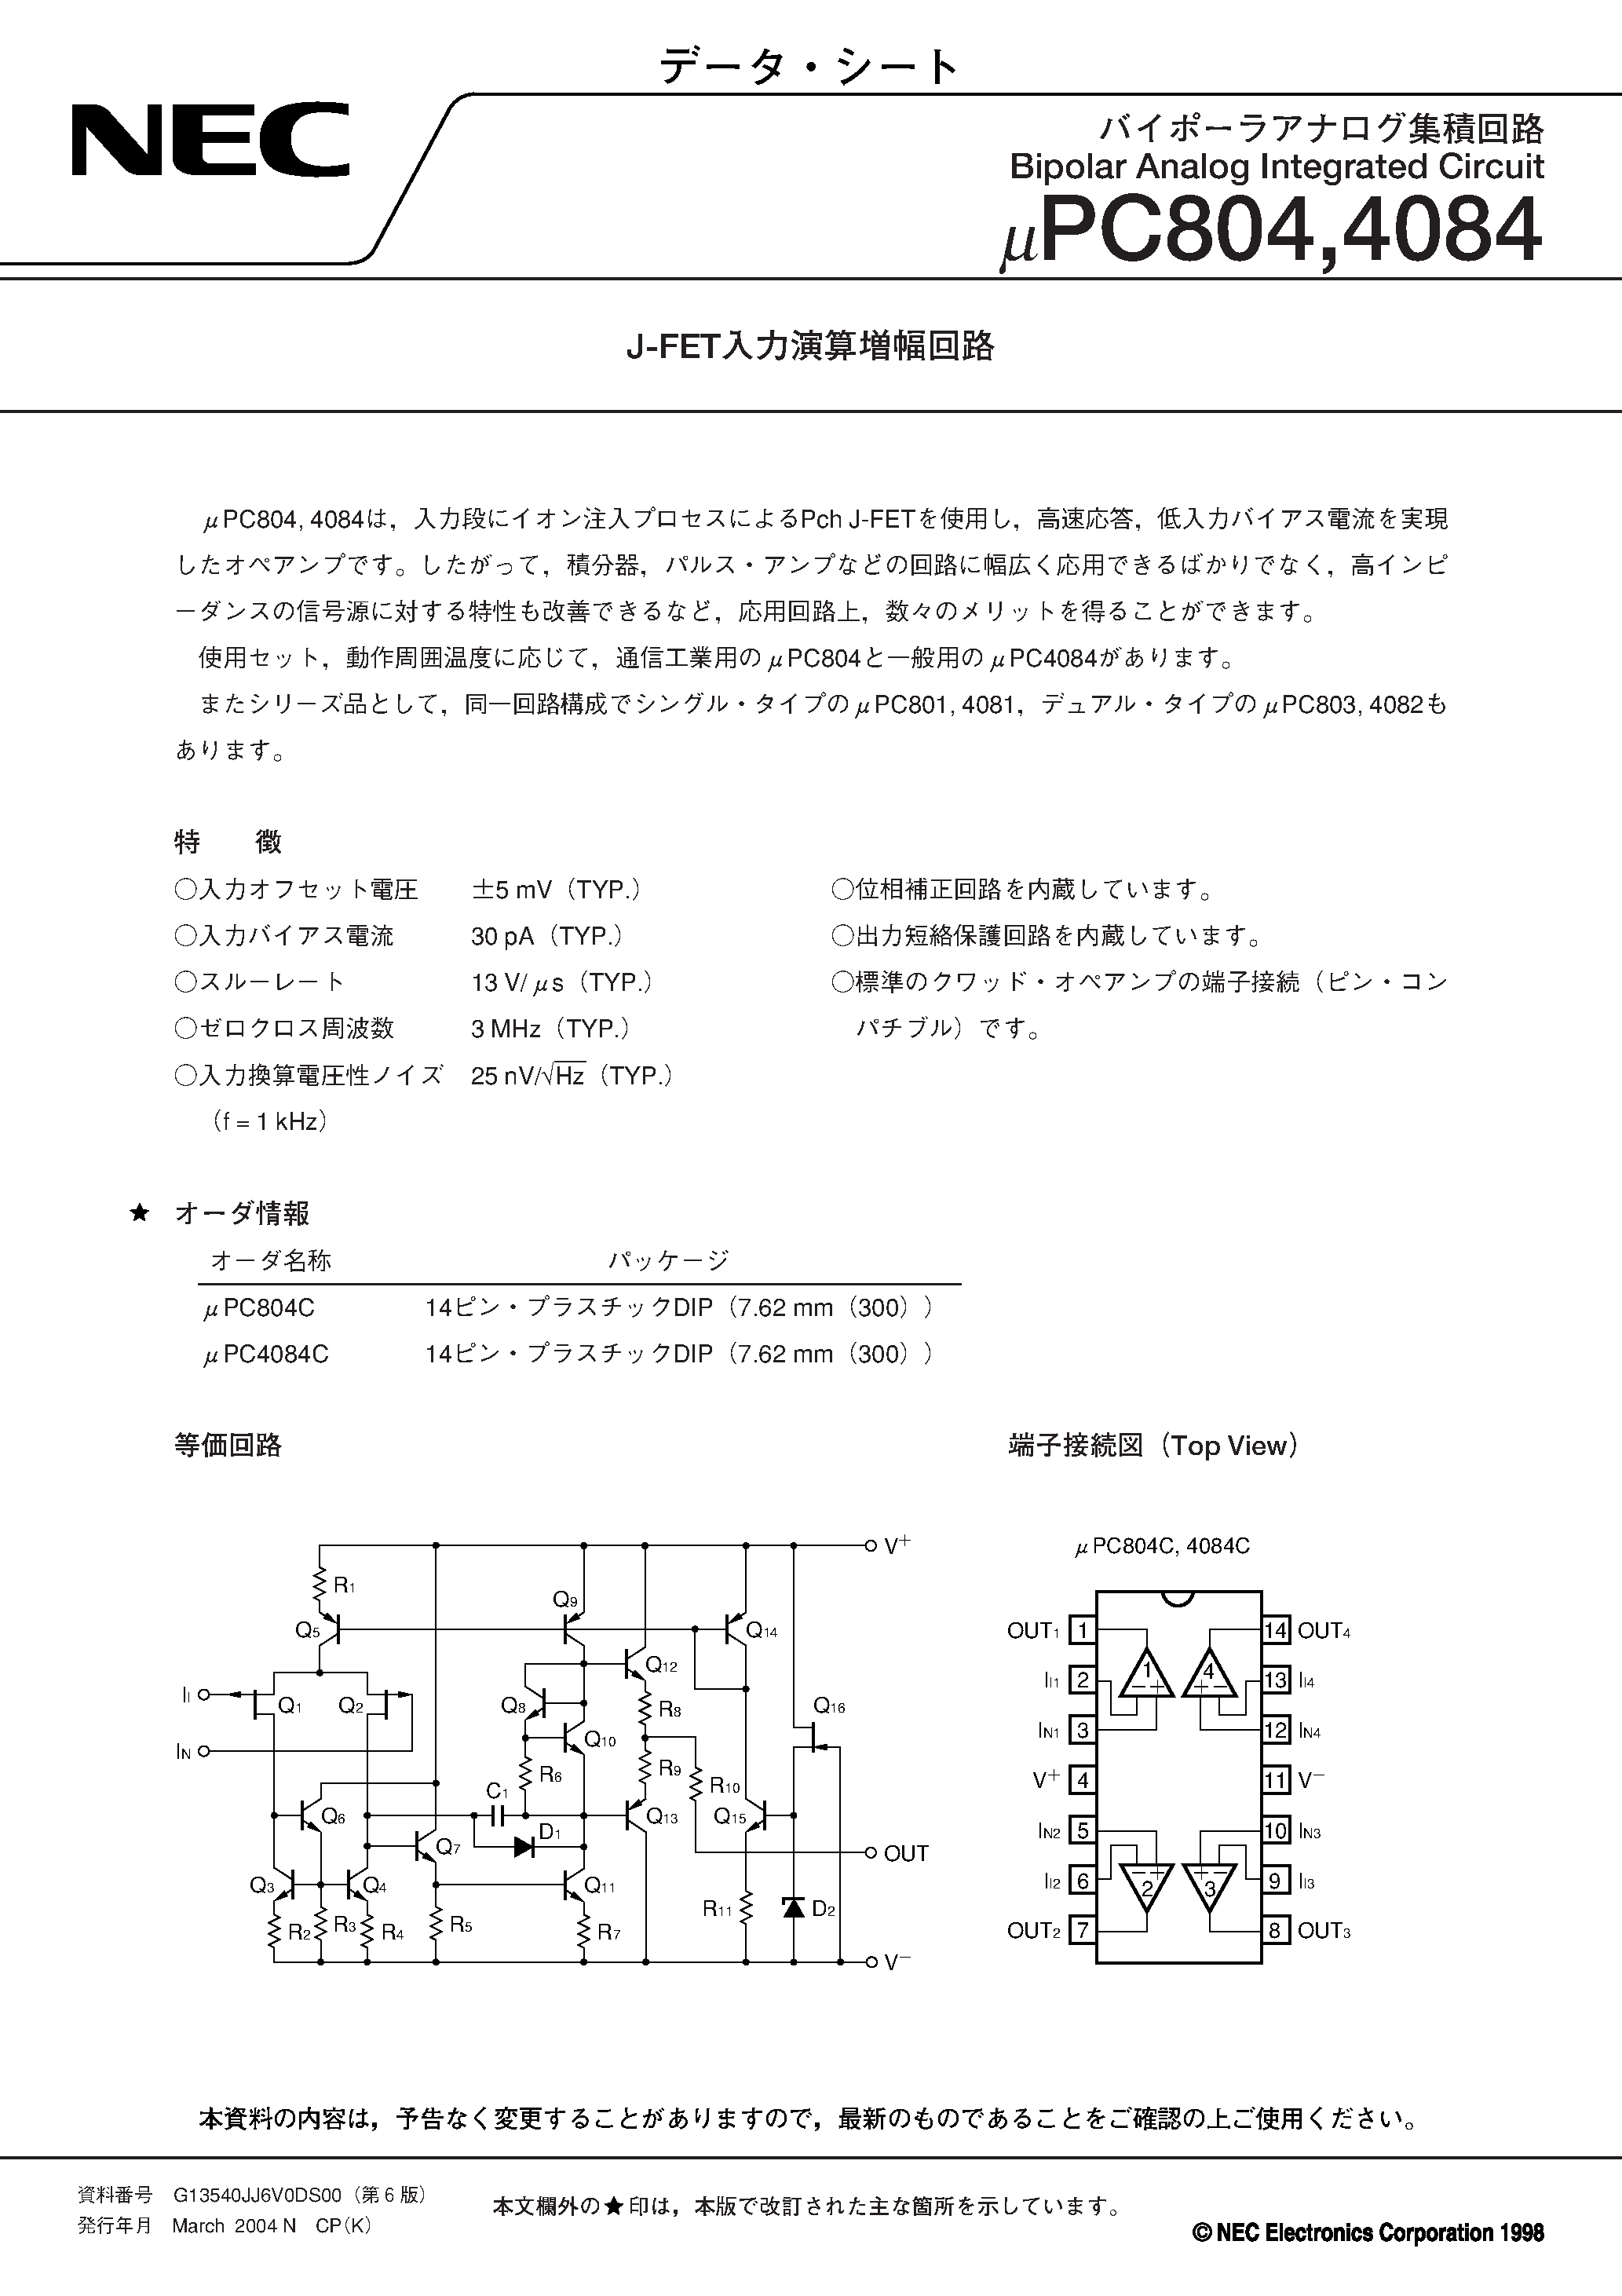 Даташит uPC804 - J-FET Bipolar Analog Integrated Circuit страница 1